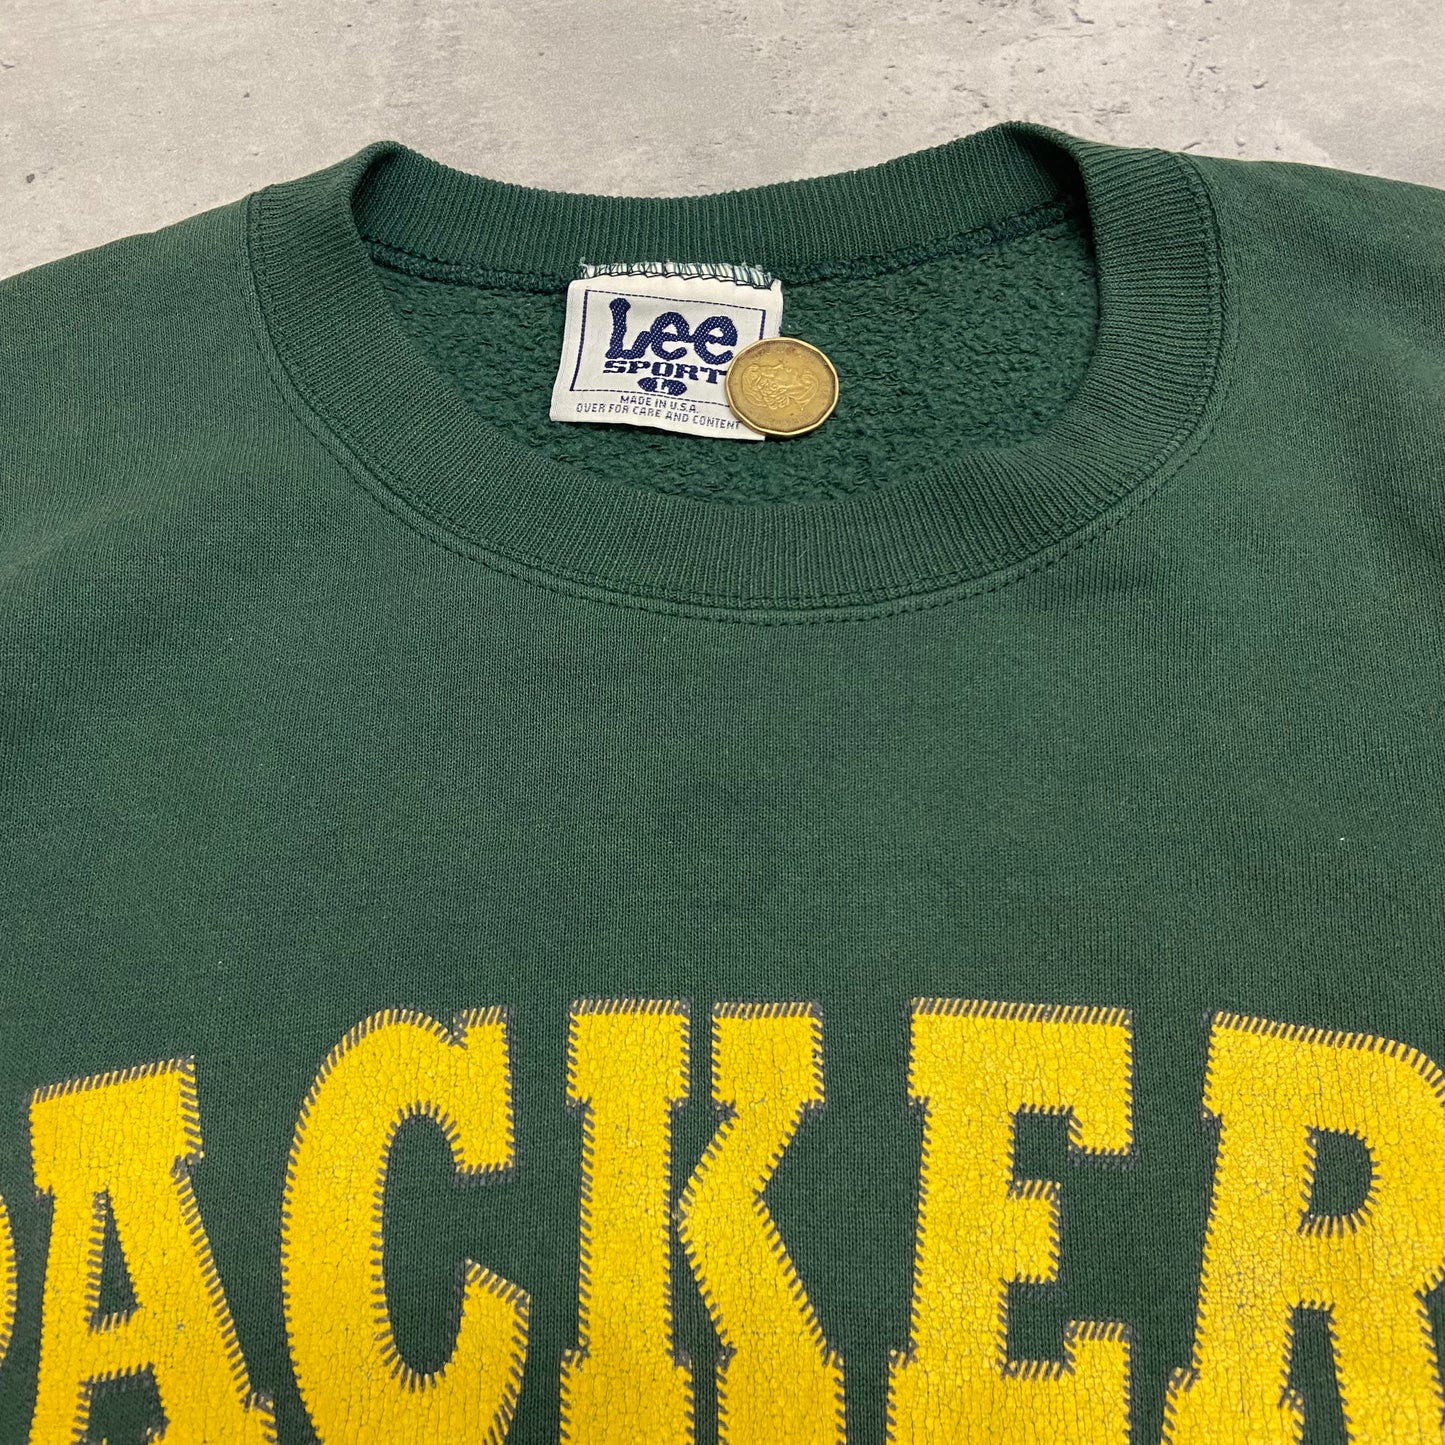 90's Green Bay Packers NFL Sweatshirt size L